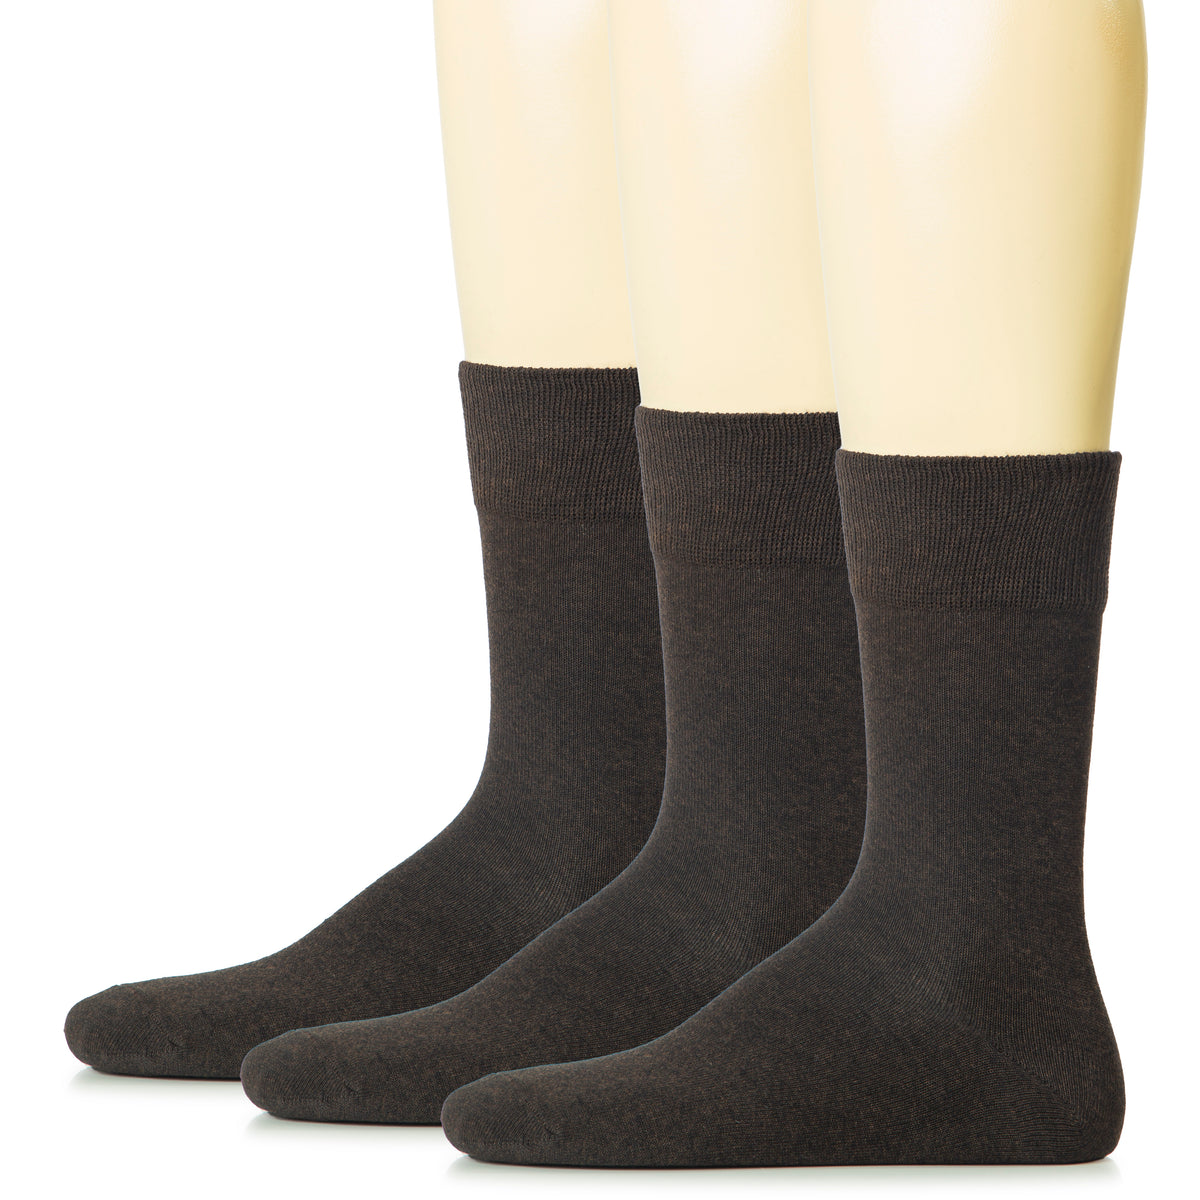 Hugh Ugoli Men Cotton Dress Socks XL / L / M / S Sizes, 3 Pairs | Shoe Size: 13-15 | Dark Brown